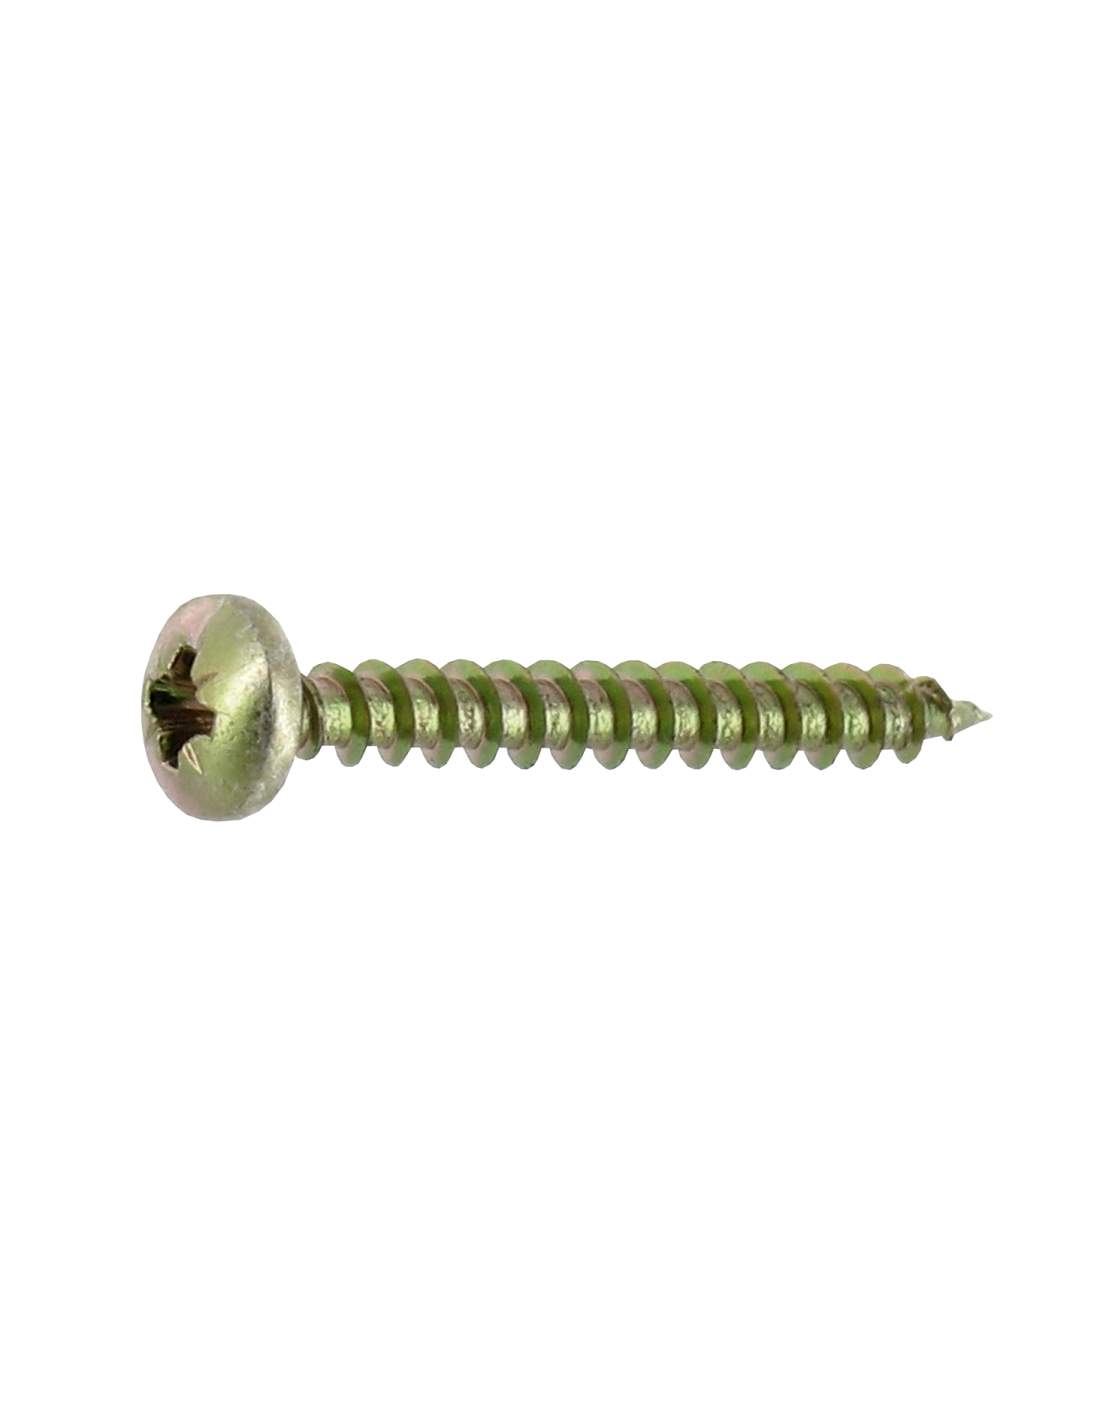 Pozidriv round-head agglomerated screws ABI 4x16, 30 pcs.